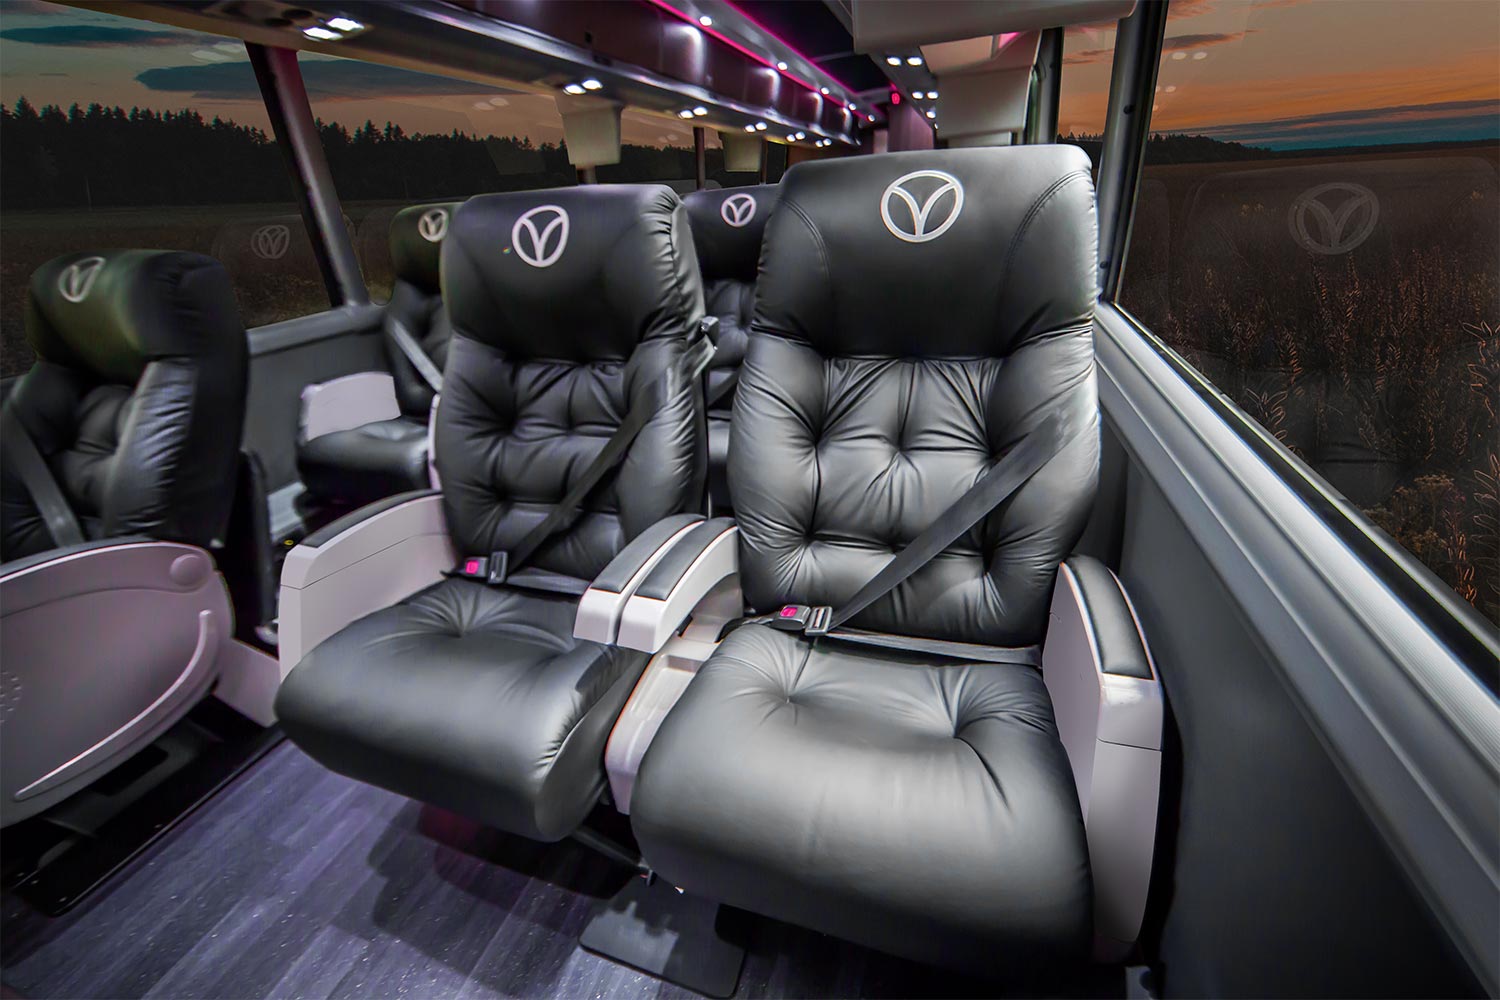 The seats on a Vonlane bus, a luxury coach that travels through Texas